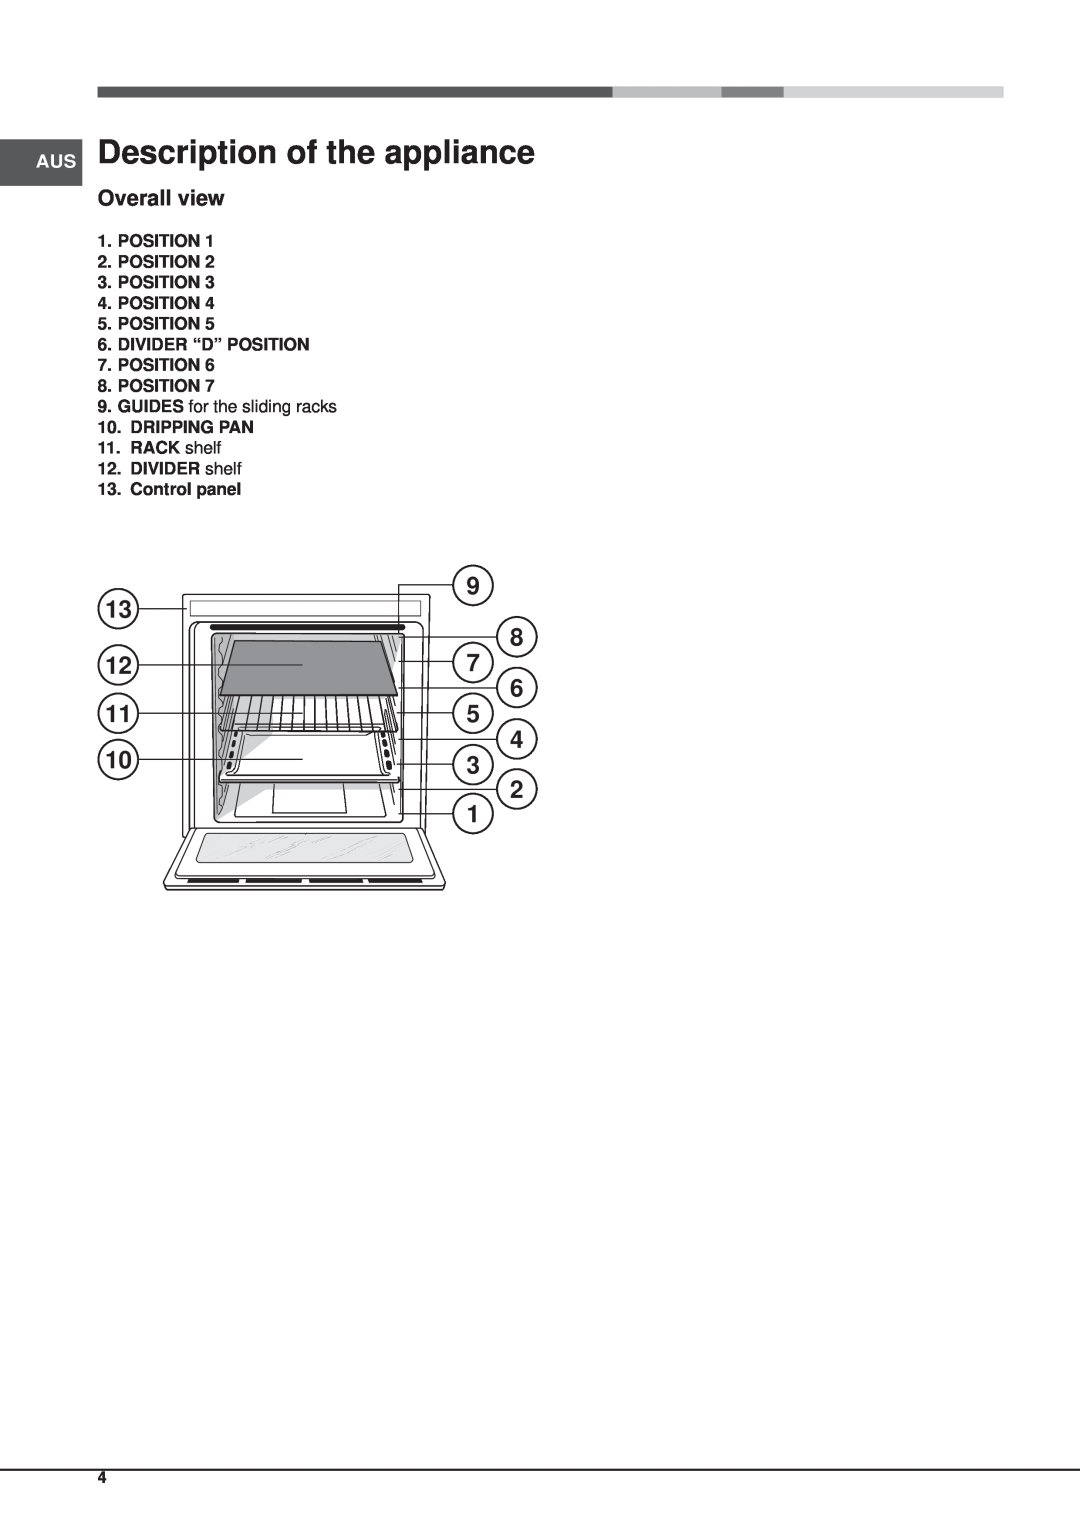 Ariston OK 997E LDP AUS S AUS Description of the appliance, 13 12 11 10, 9 8 7 6 5 4, Overall view, Position 